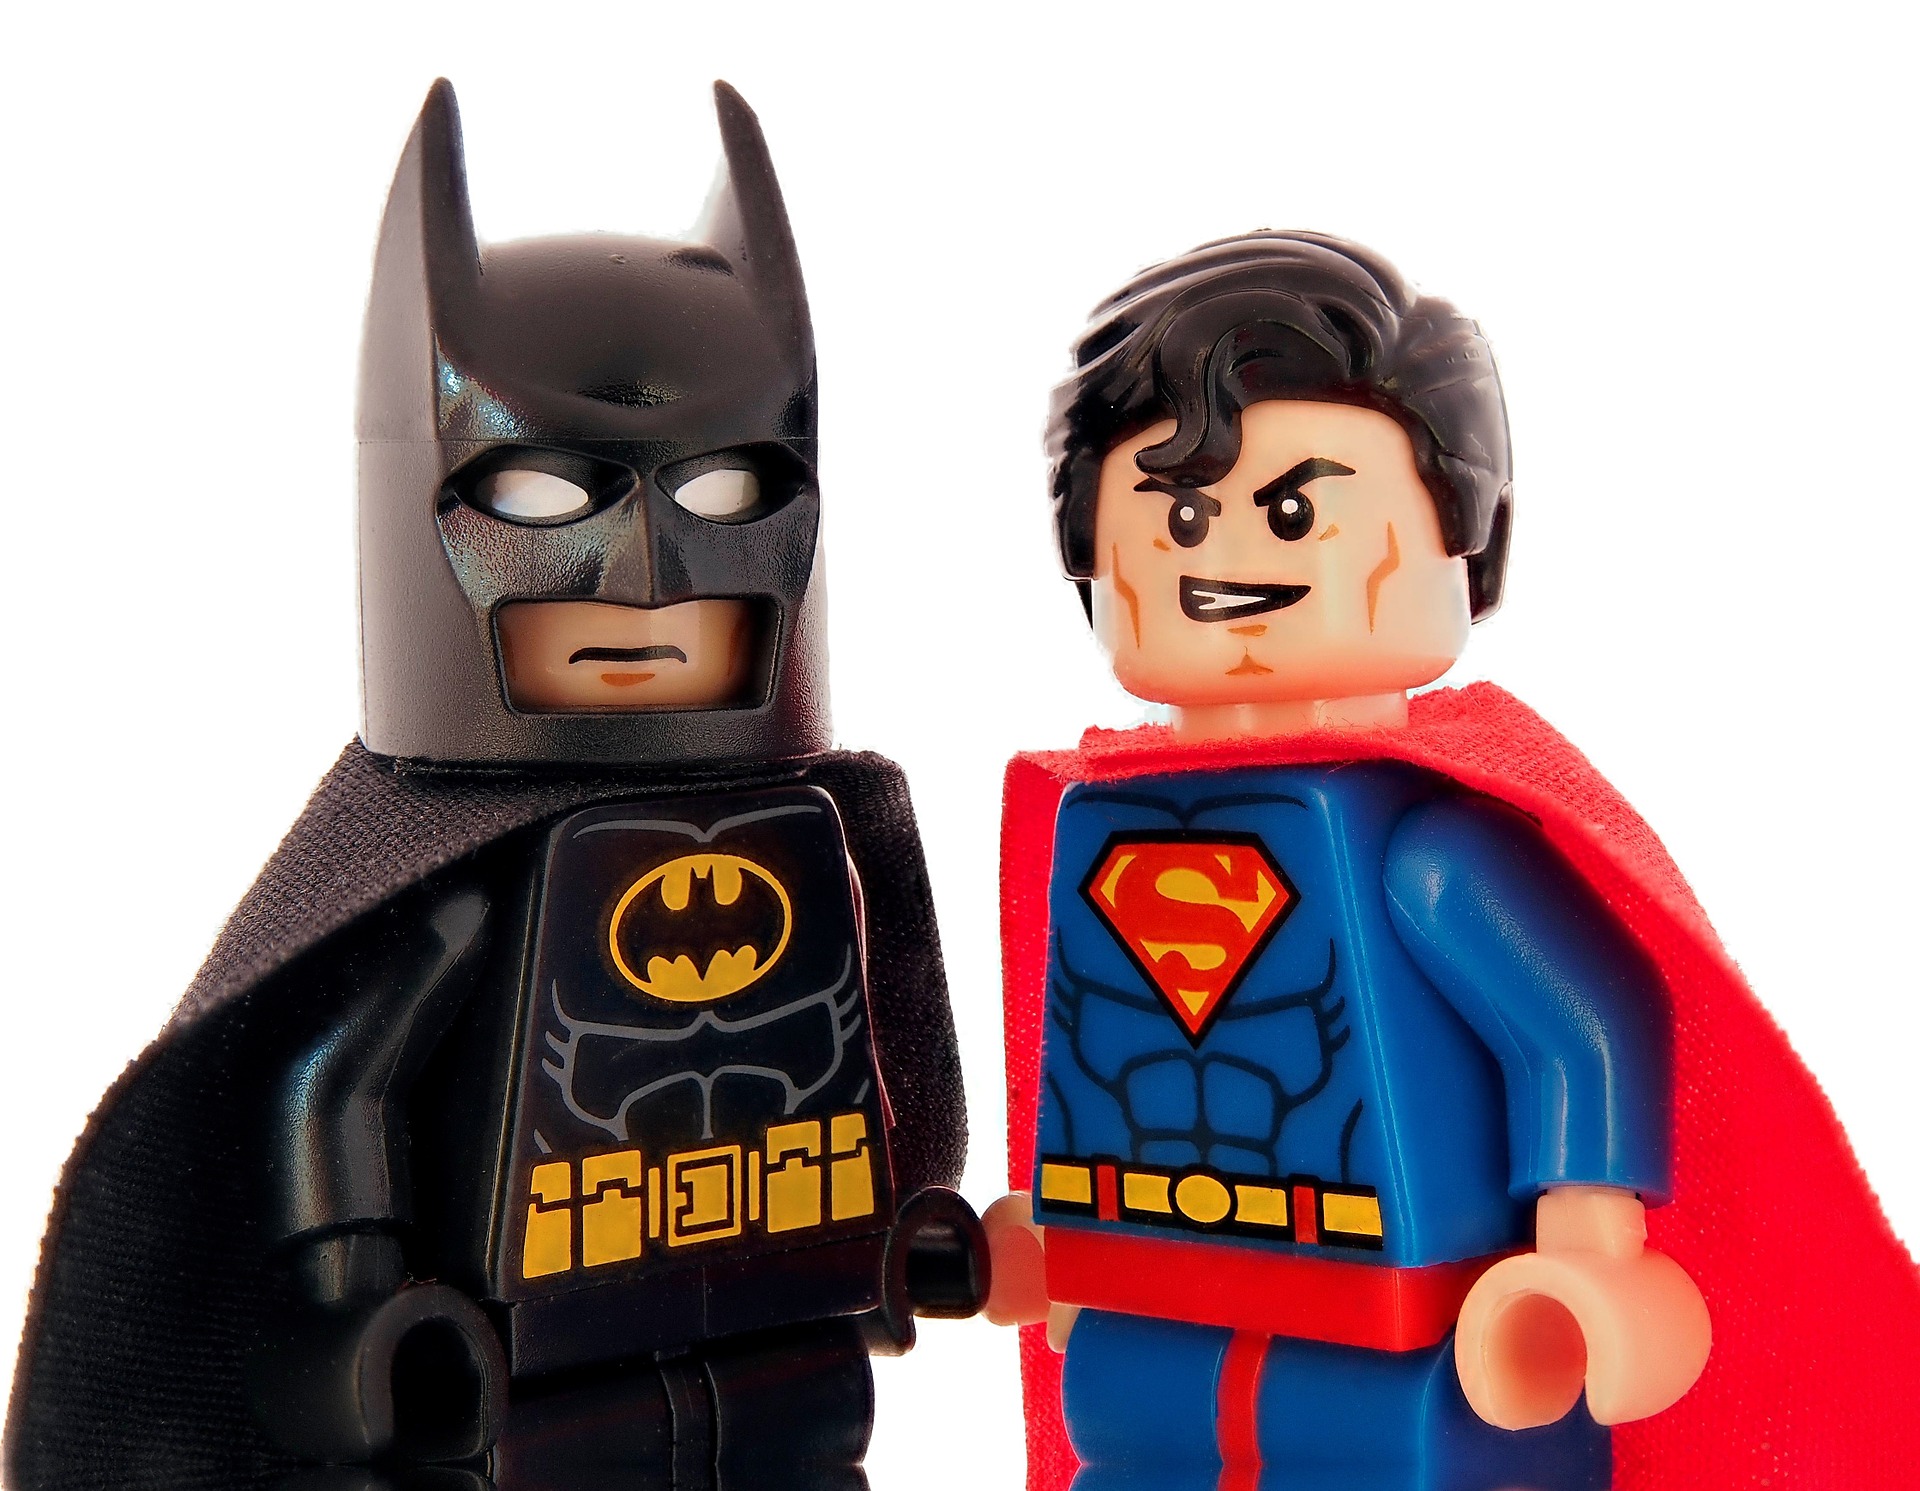 Batman and Superman LEGO figures